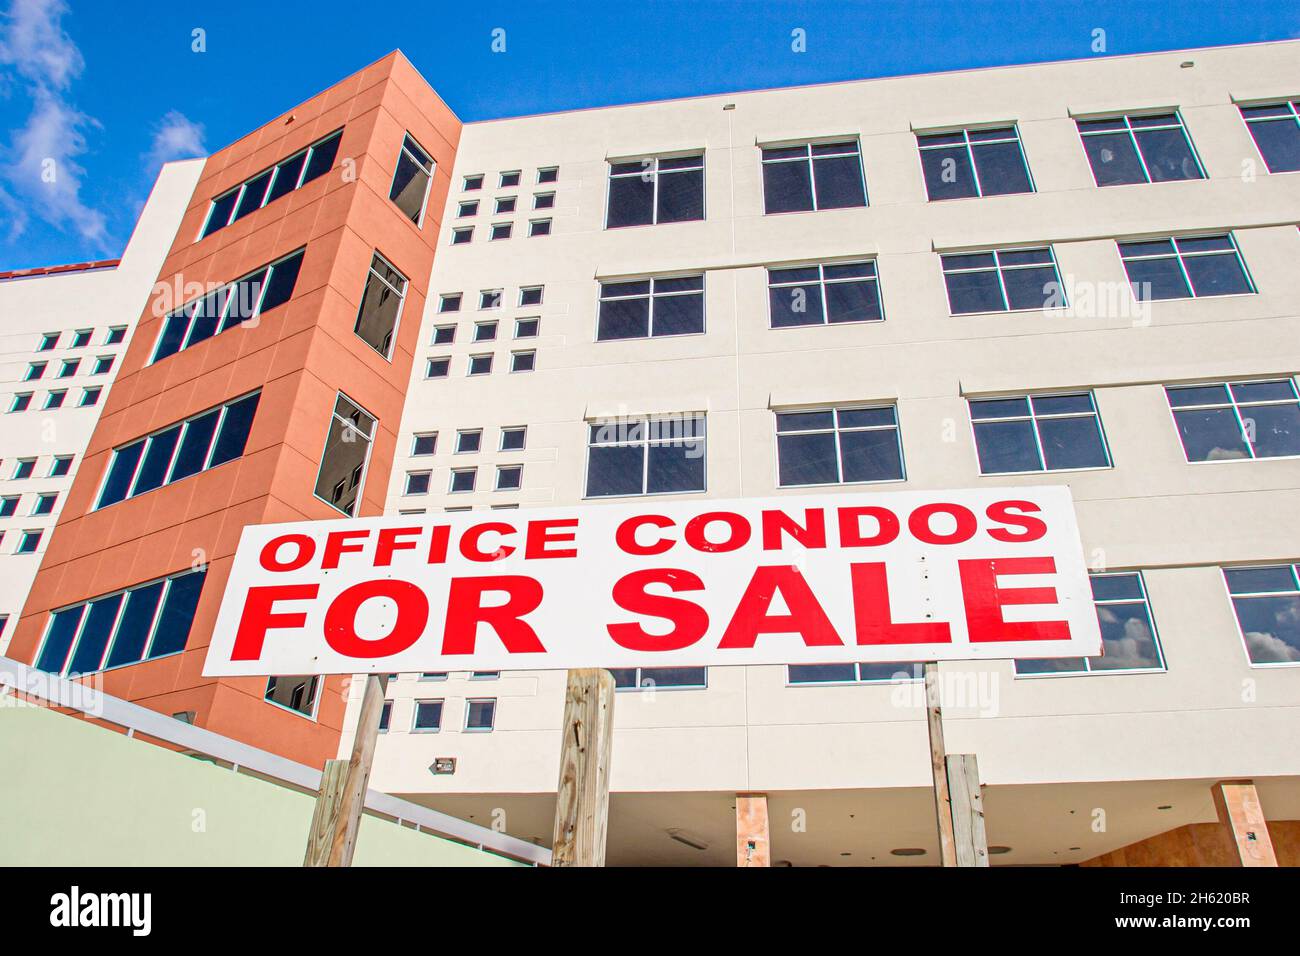 Miami Florida,North Miami,office condos for sale commercial real estate new building Stock Photo